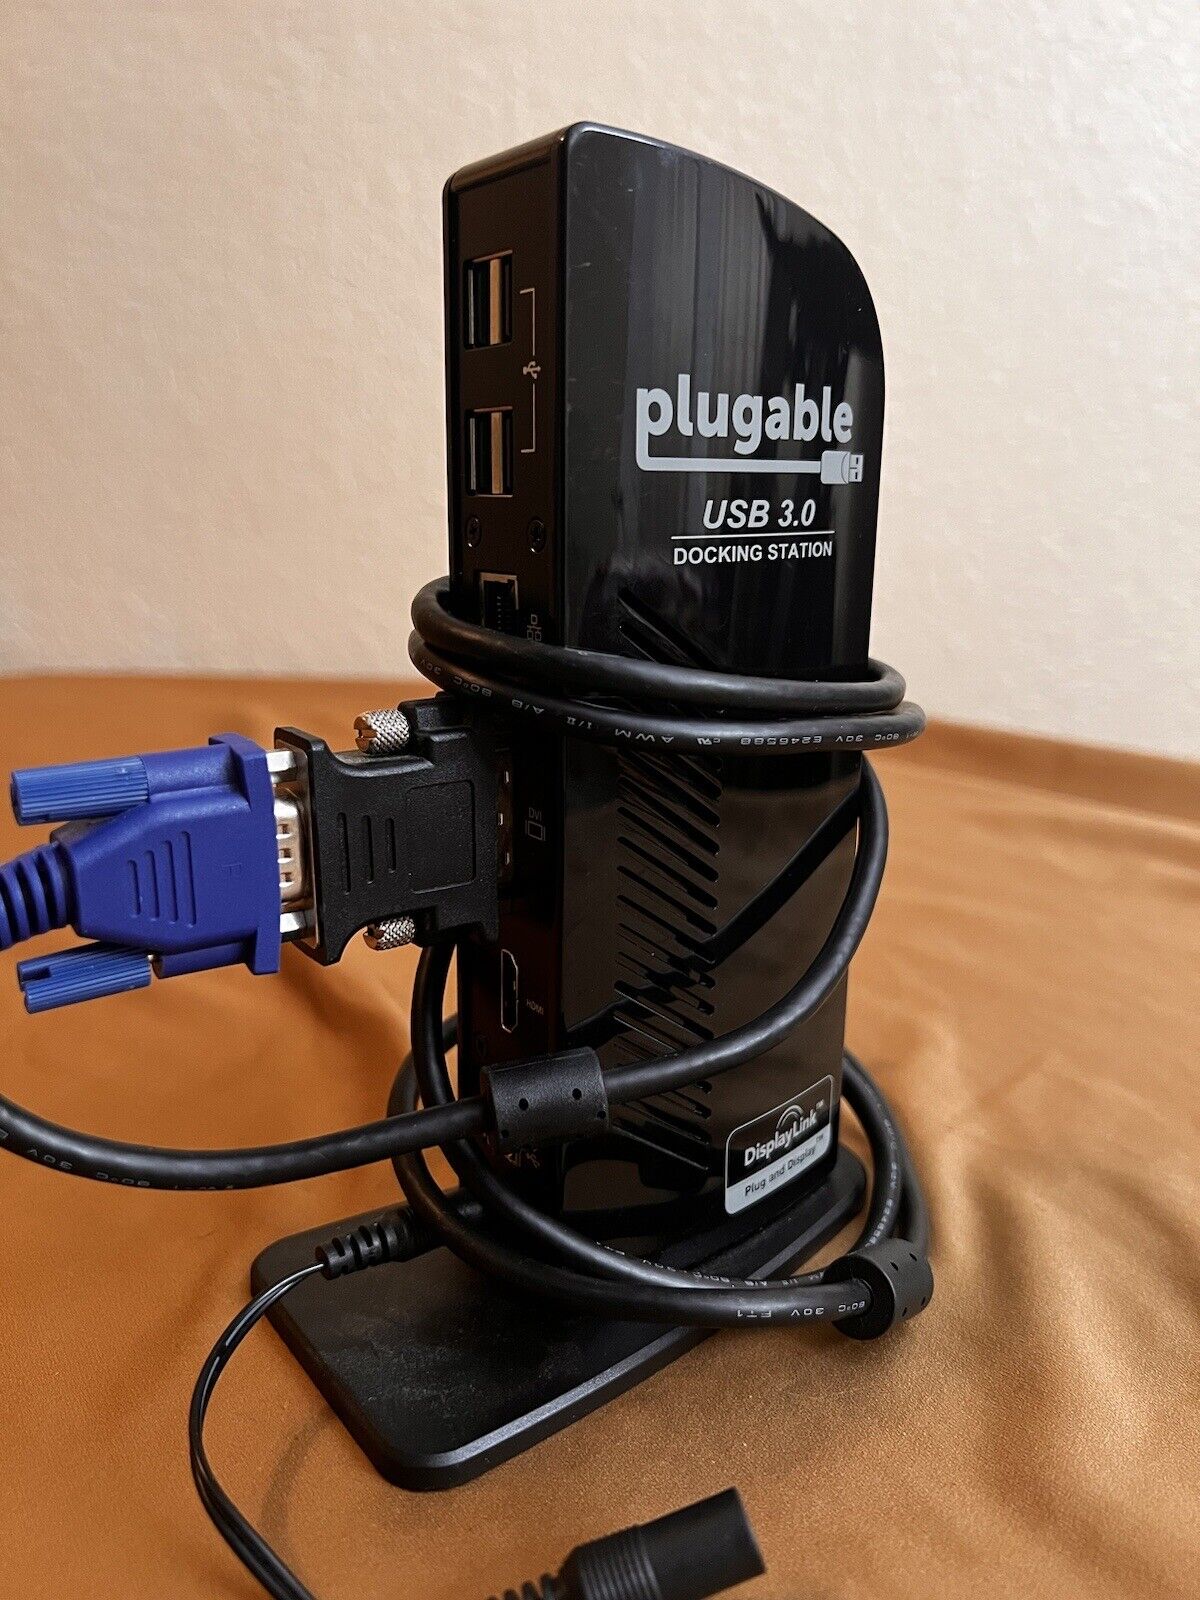 Plugable USB 3.0 Universal Docking Station for Windows